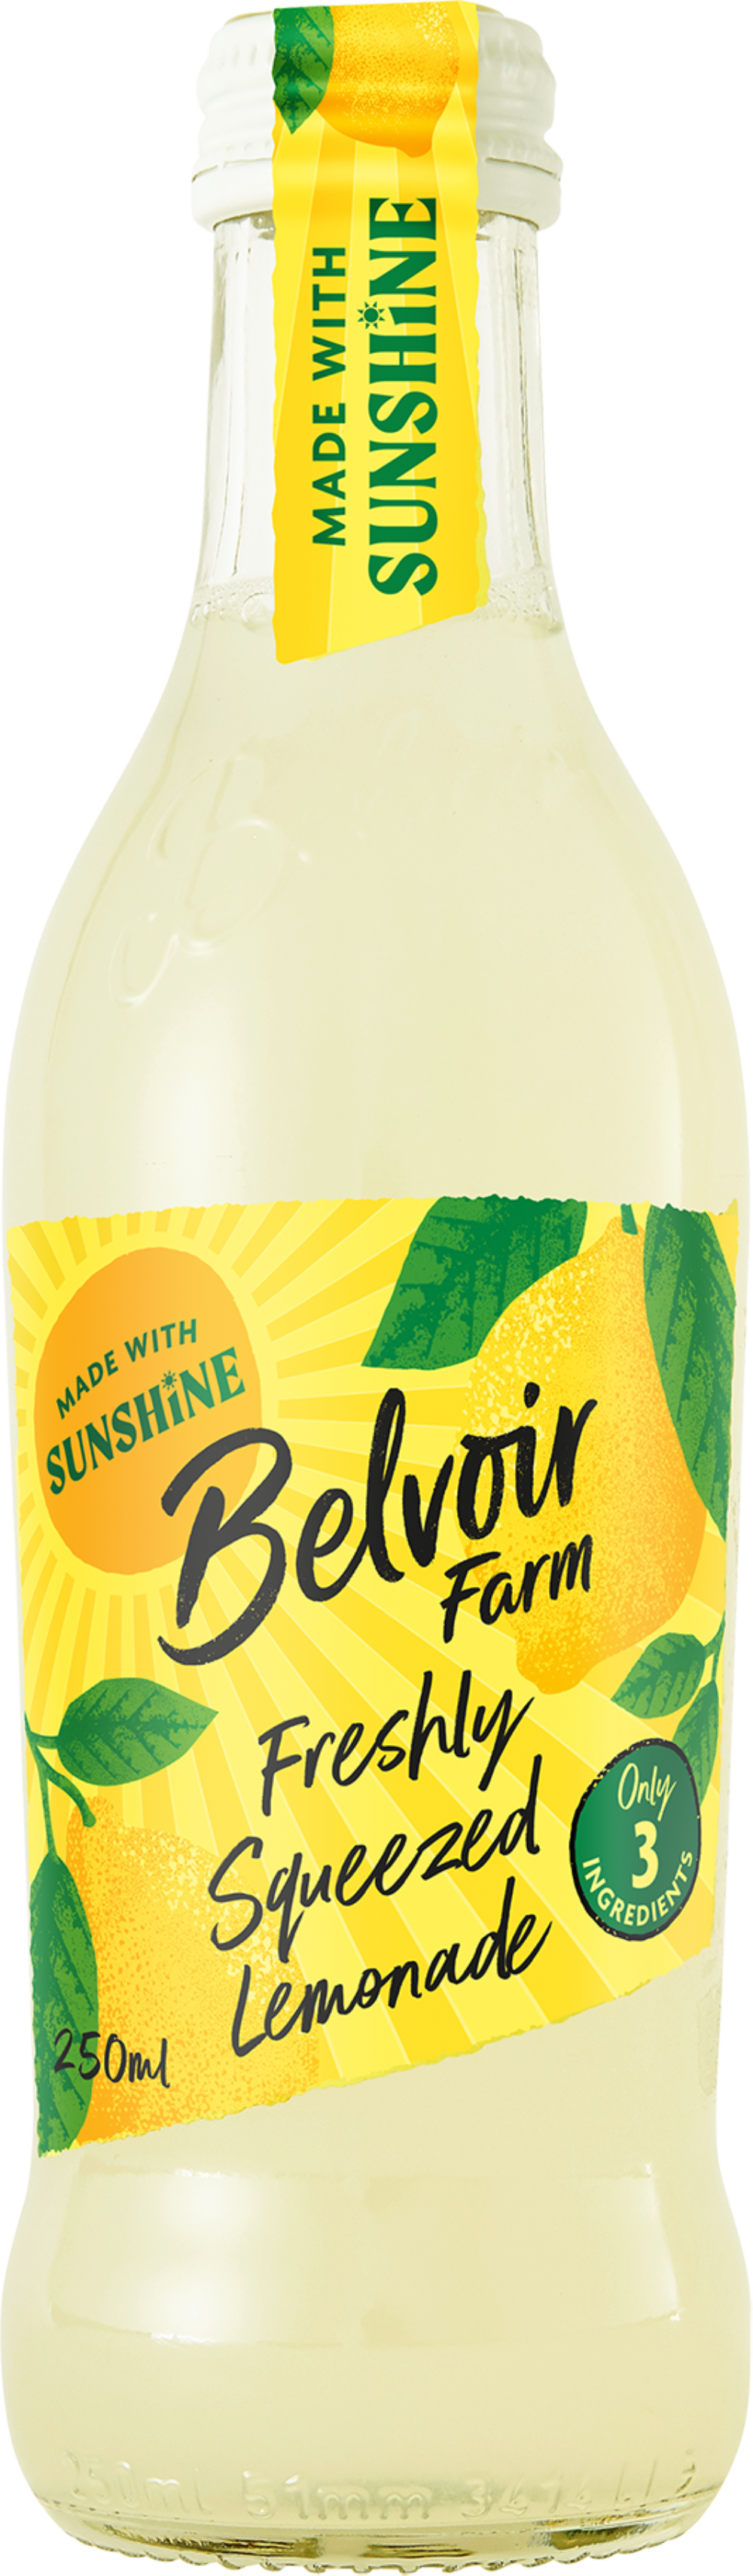 BELVOIR Freshly Squeezed Lemonade 25cl